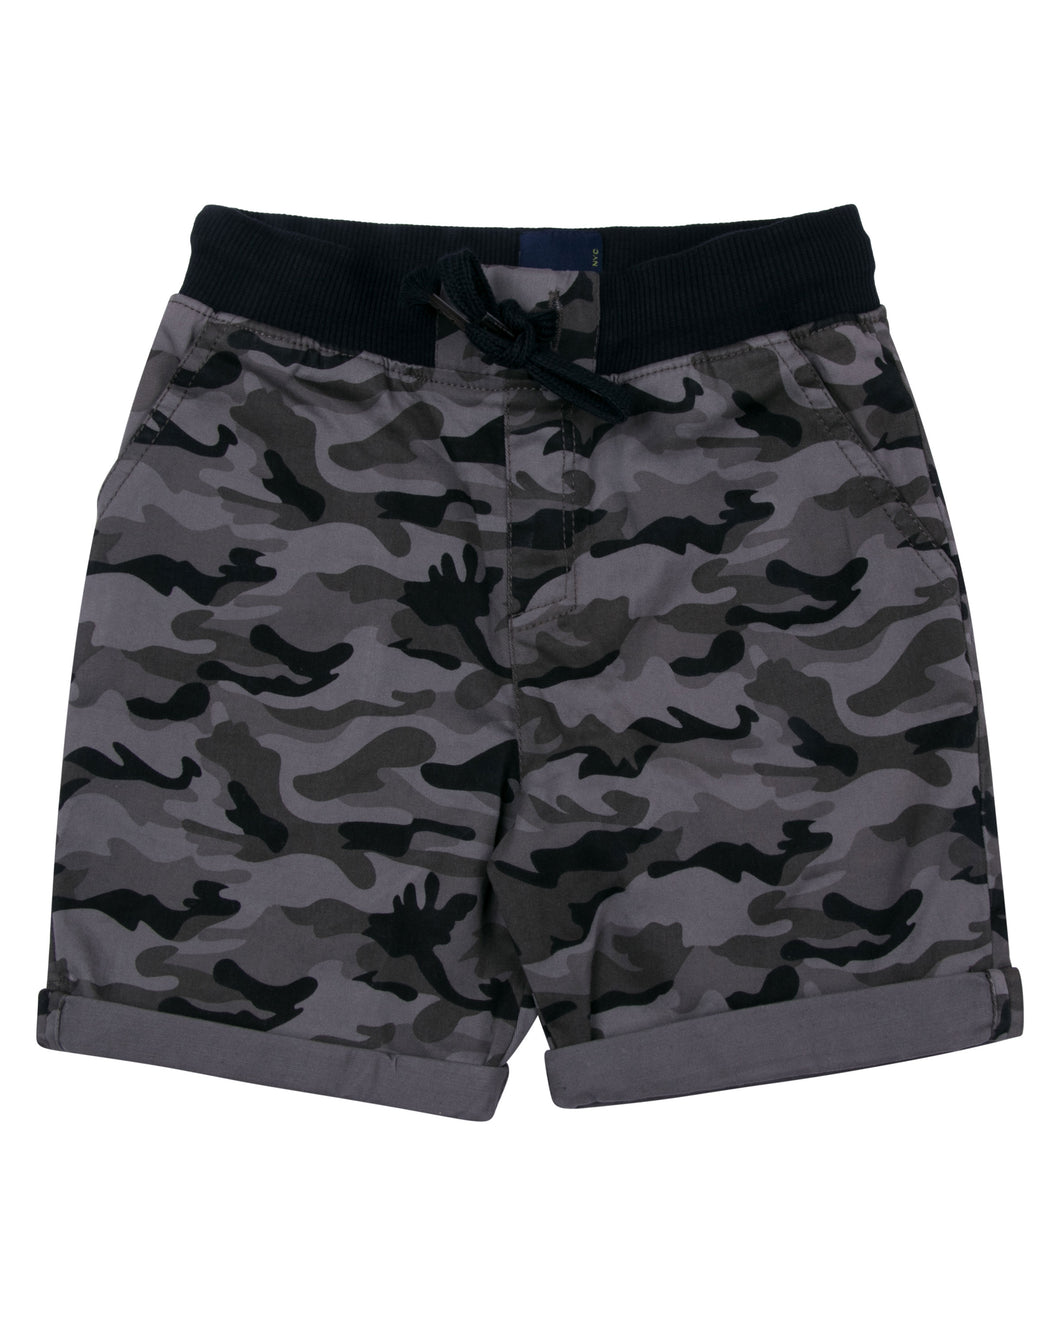 Boys Solid Army Printed Shorts